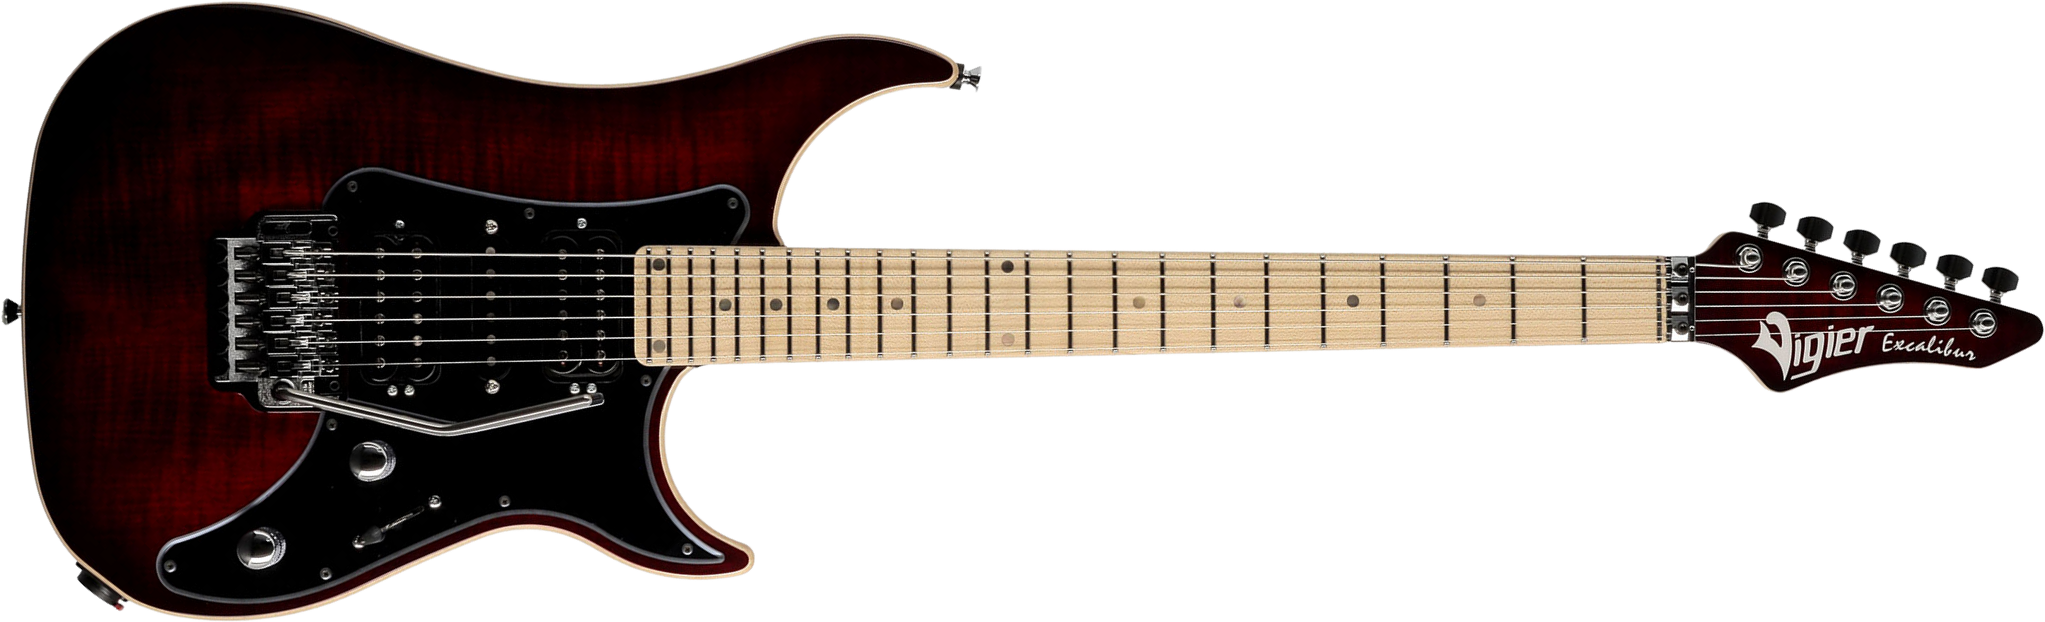 Vigier Excalibur Custom Hsh Fr Mn - Deep Burgundy - Str shape electric guitar - Main picture